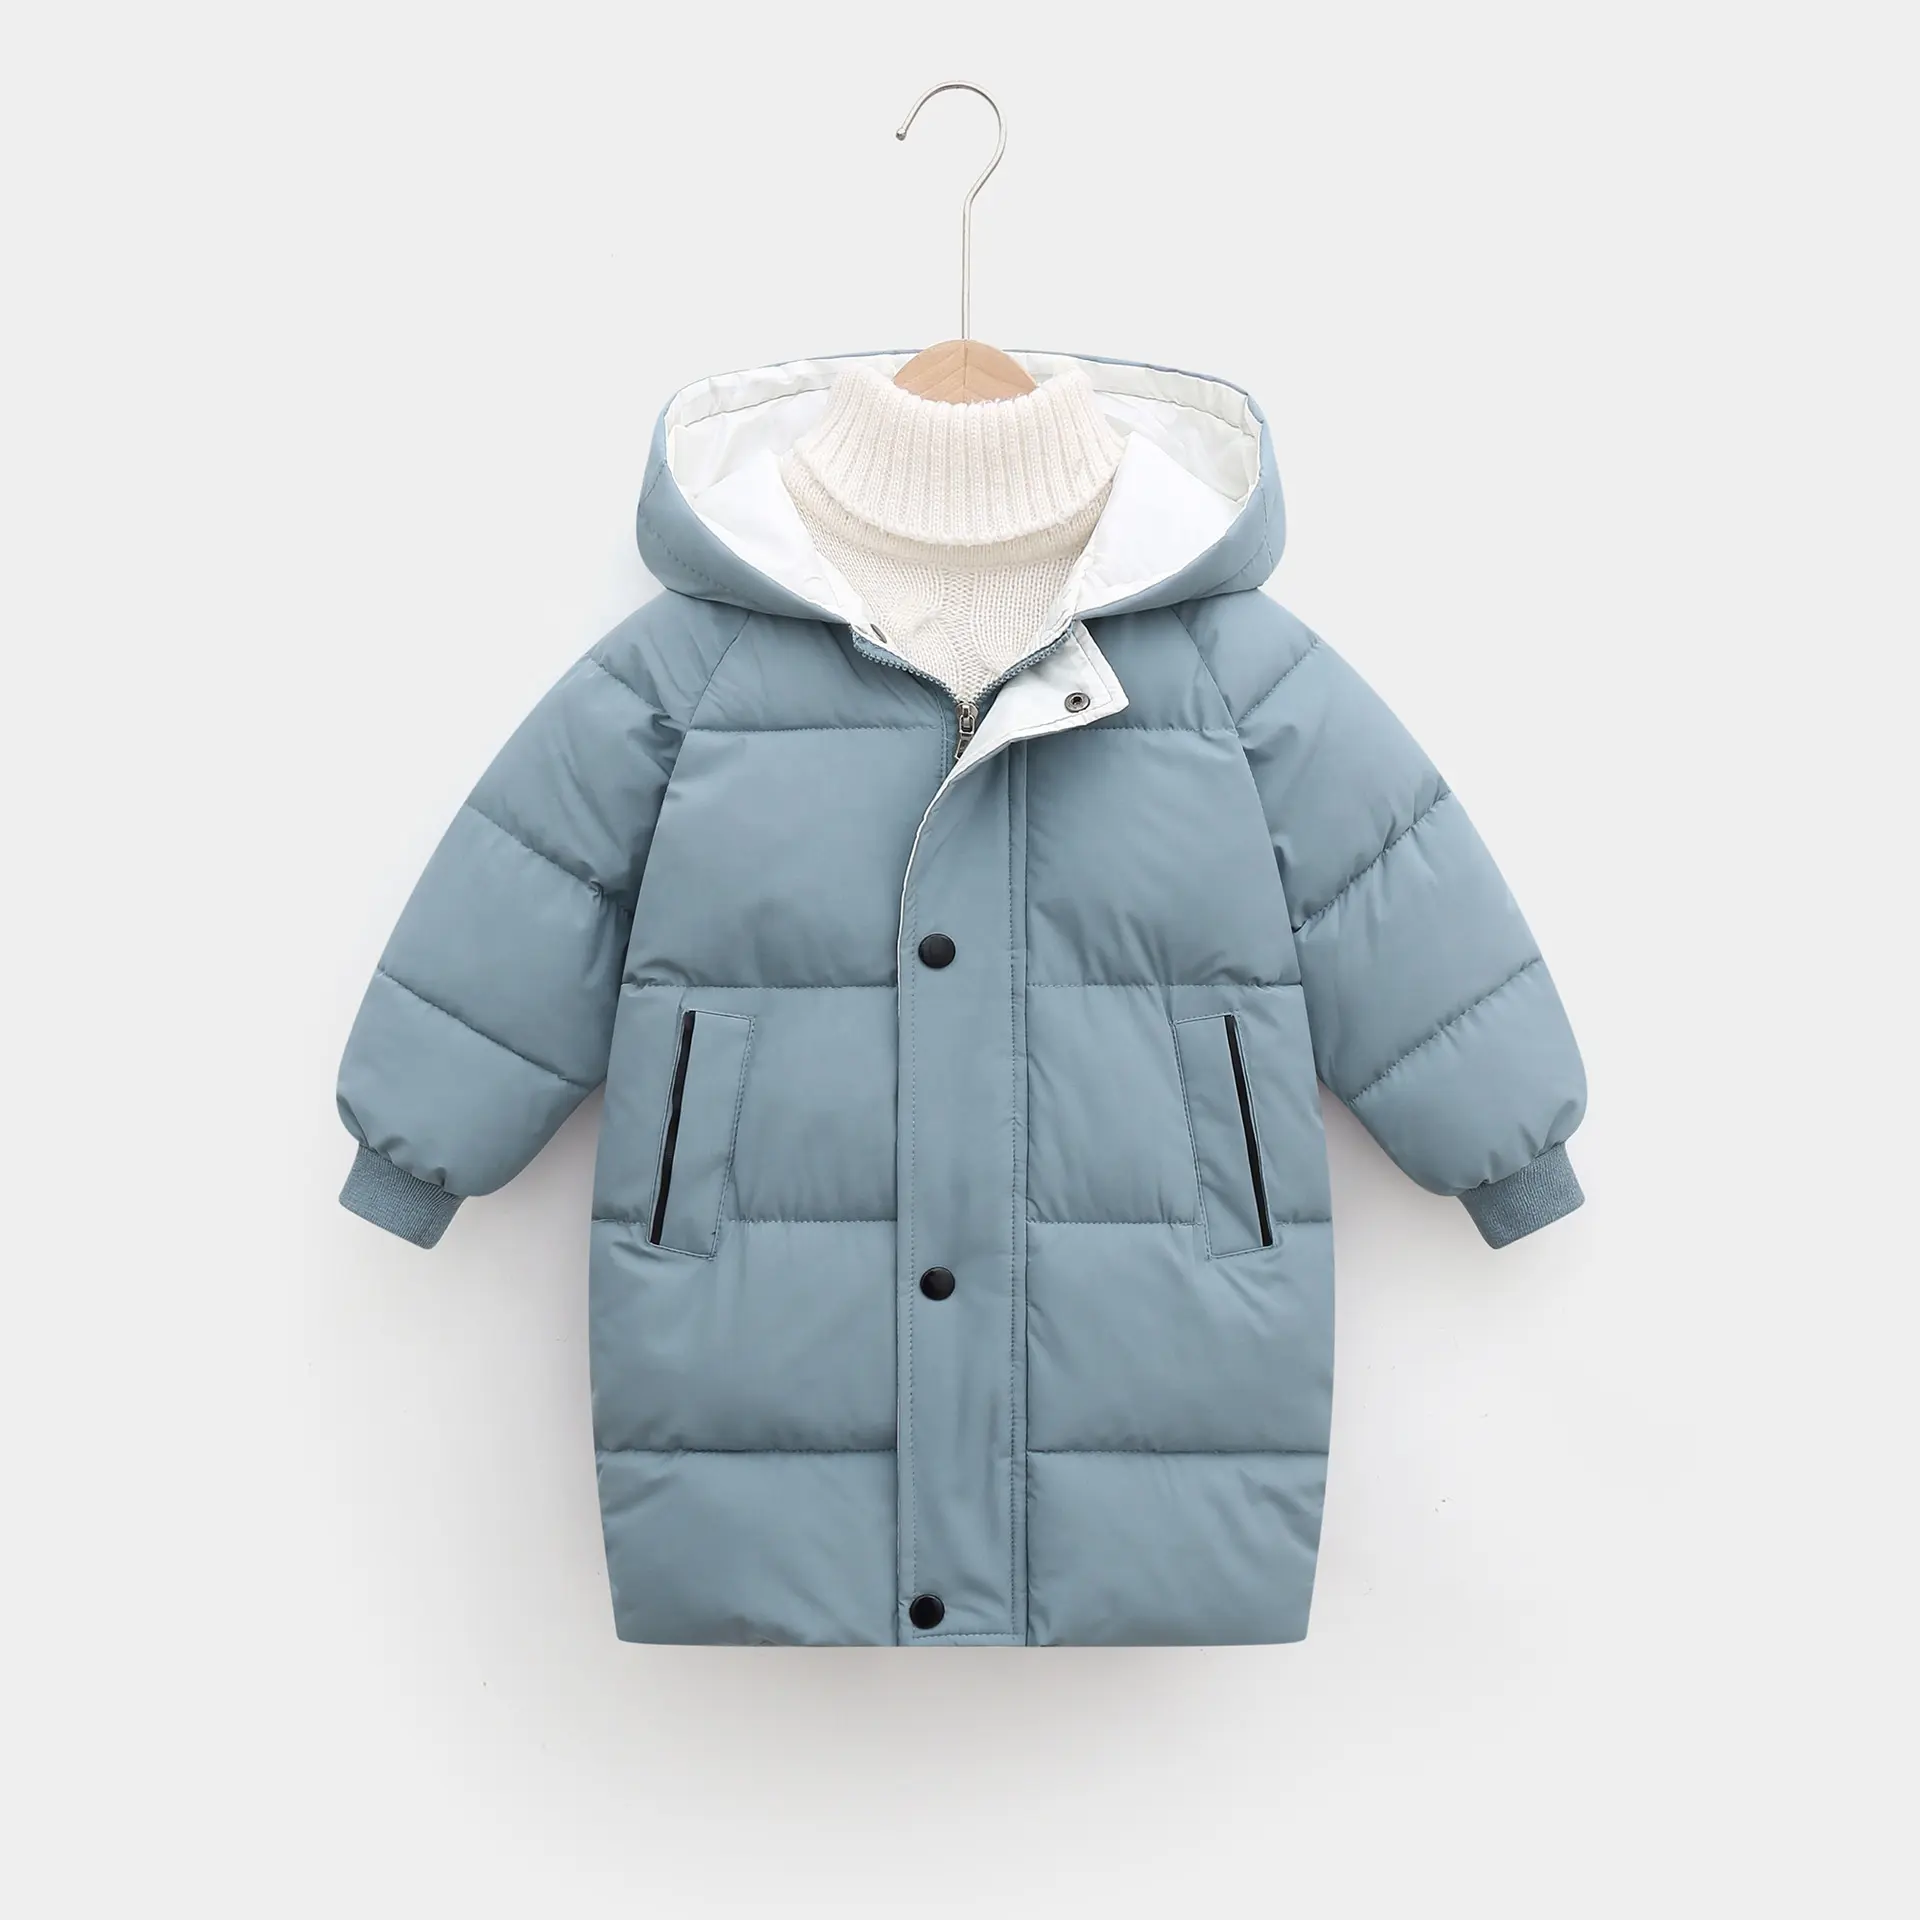 OshKosh B'Gosh Baby Boys' Toddler Perfect Heavyweight Jacket Coat